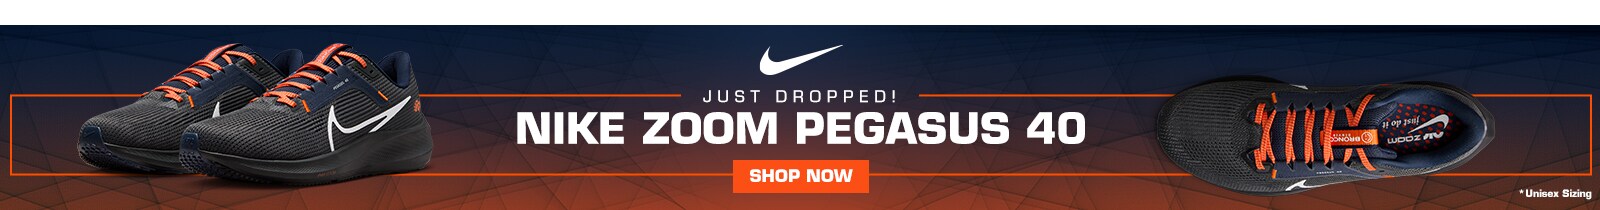 Just Dropped! Nike Zoom Pegasus 40. Shop Now.